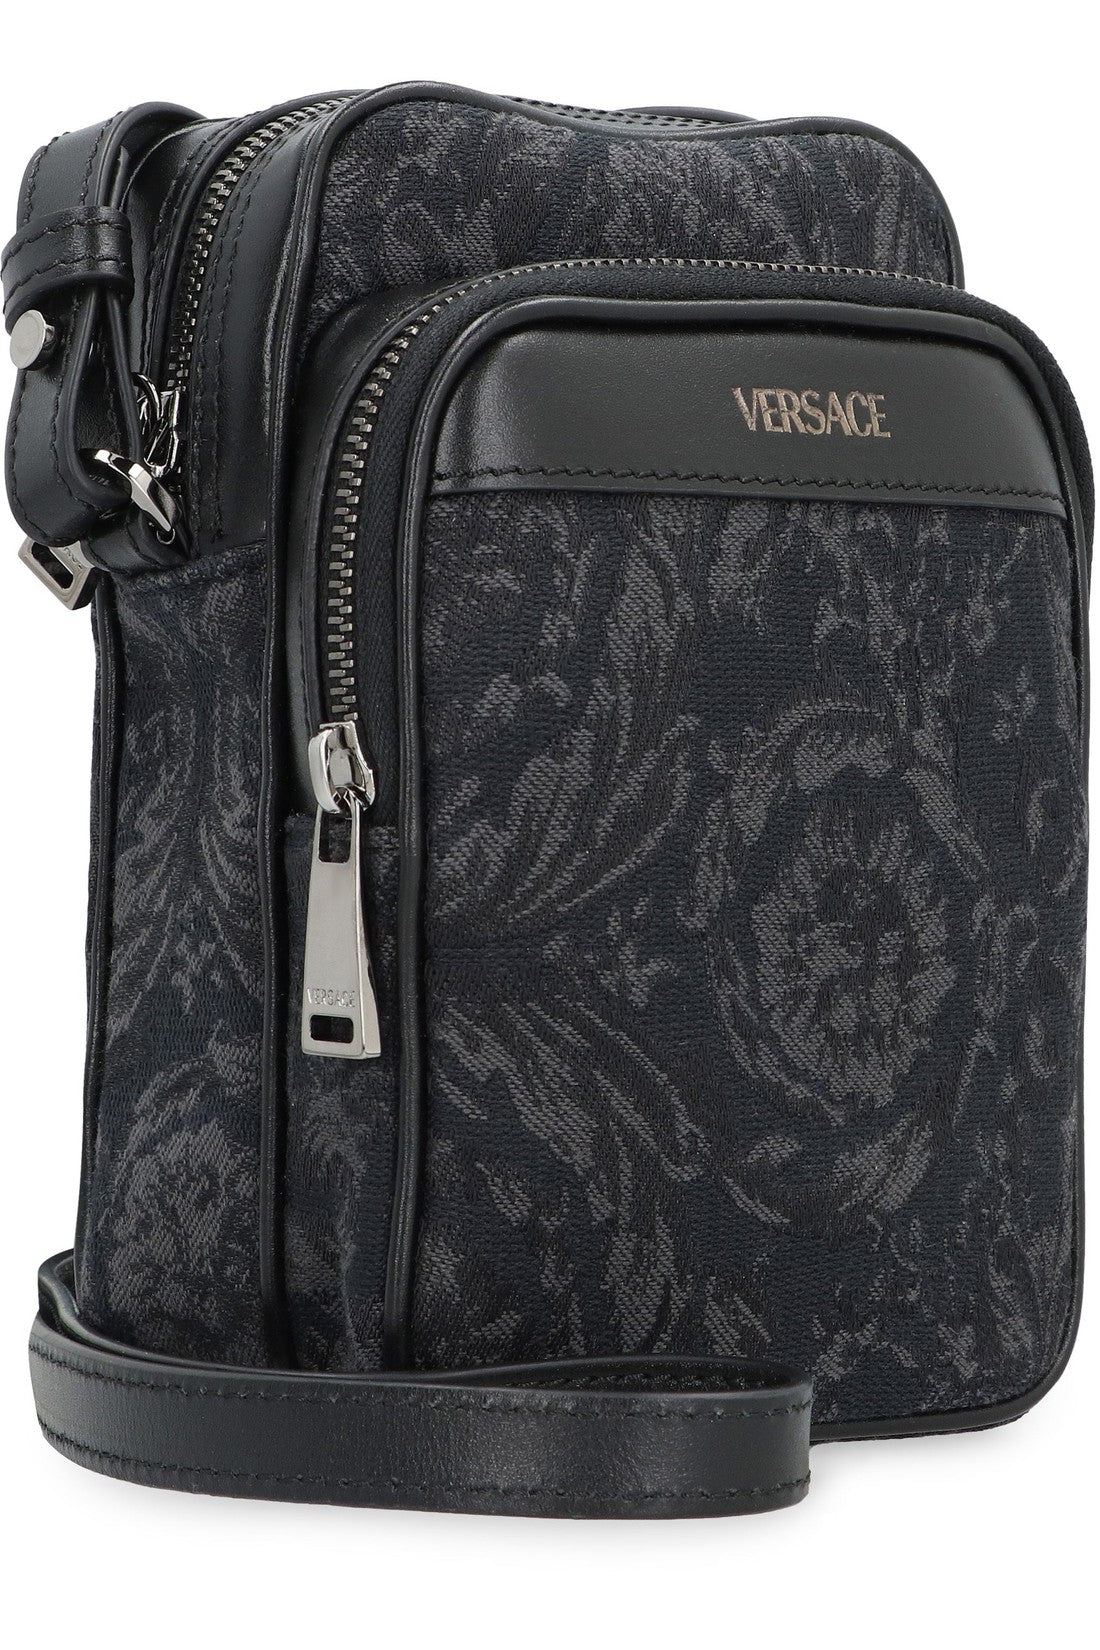 Versace-OUTLET-SALE-Athena Crossbody bag-ARCHIVIST